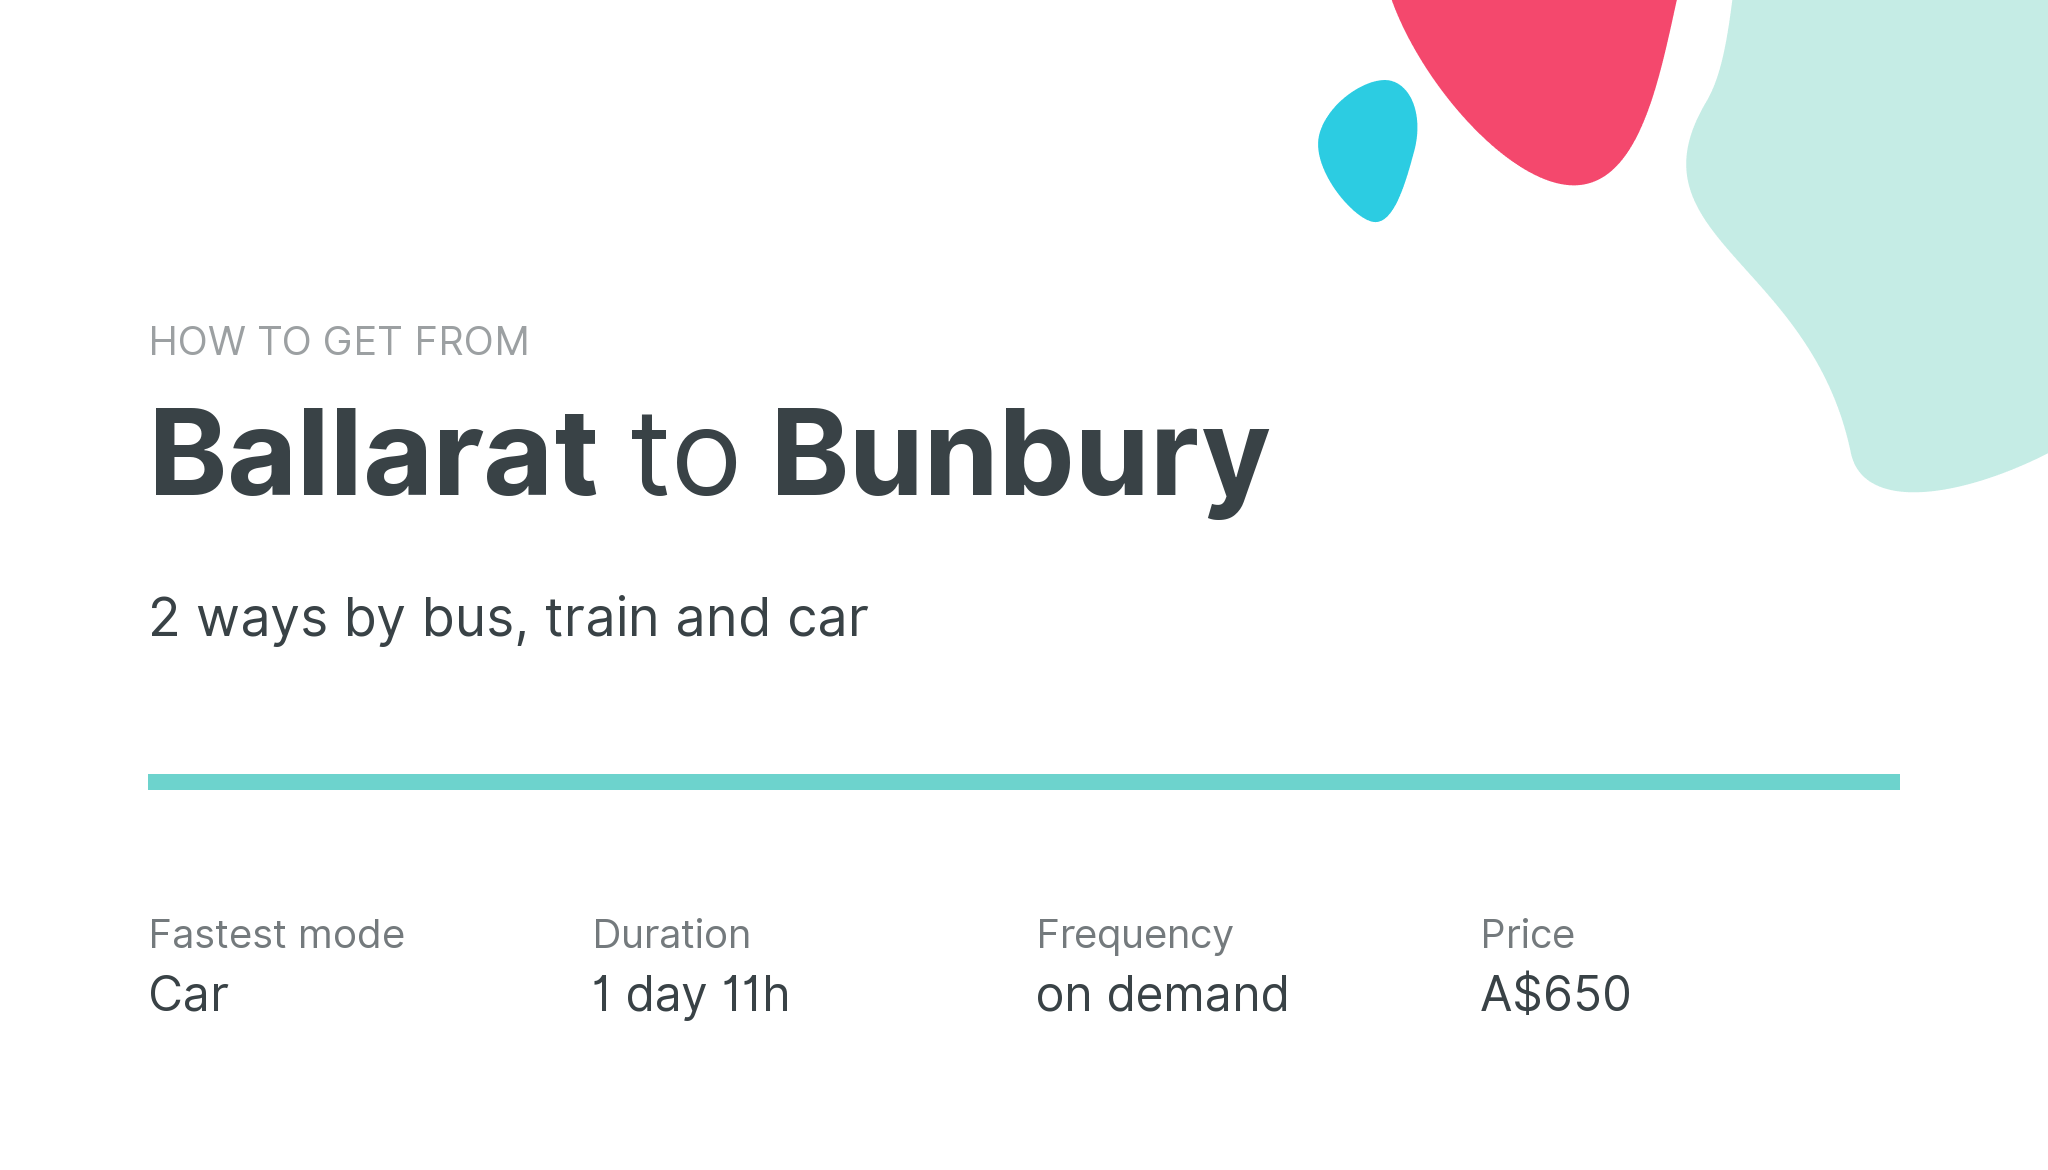 How do I get from Ballarat to Bunbury